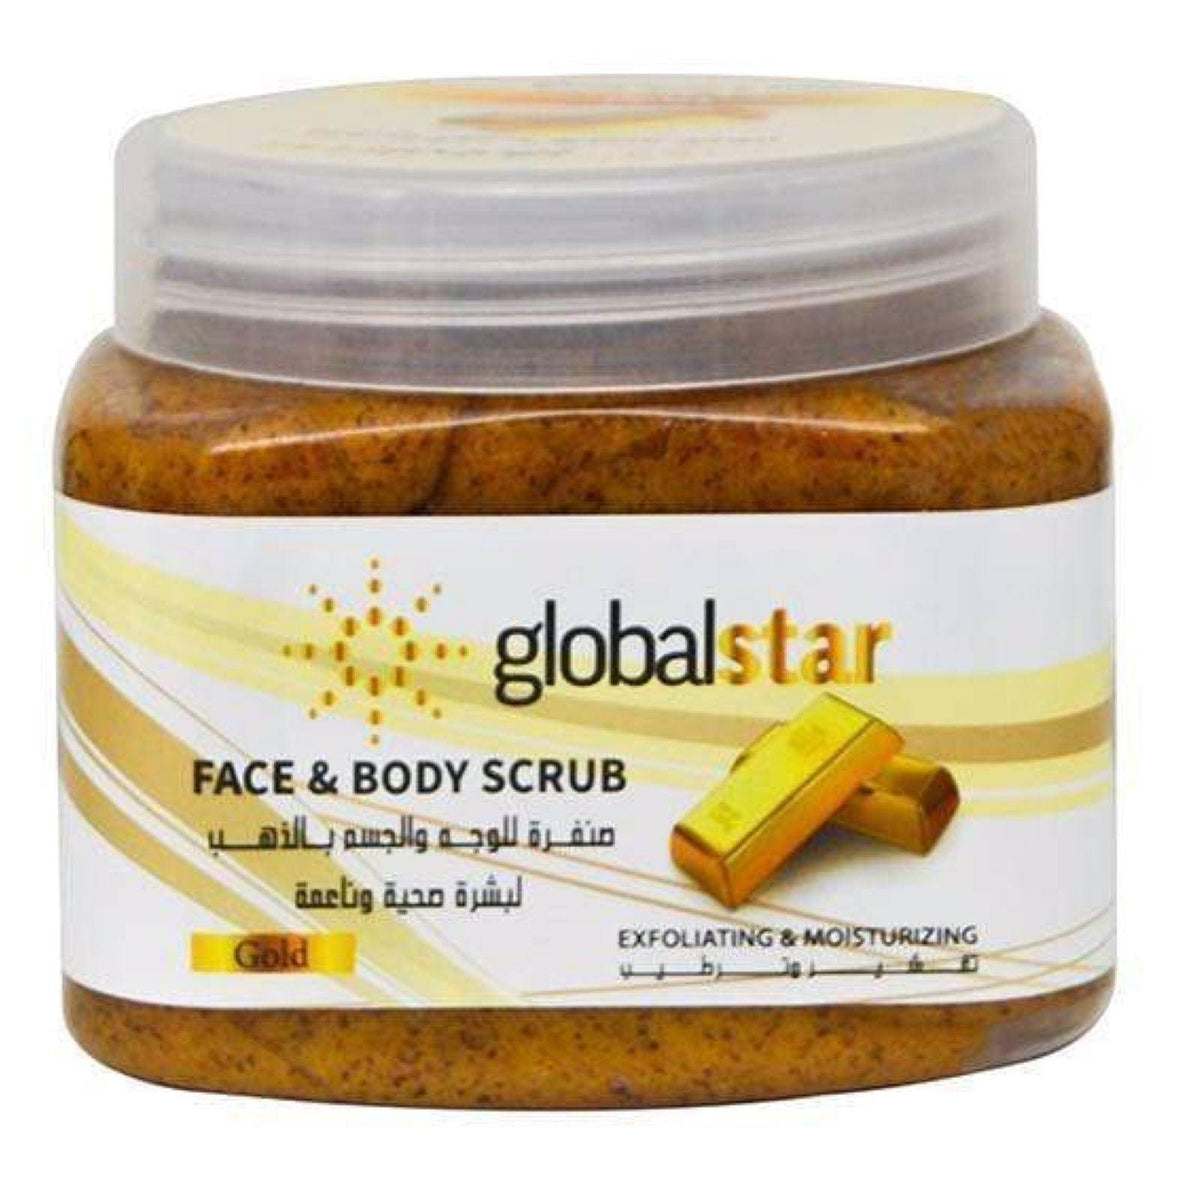 Globalstar Exfoliating Face & Body Scrub Gold 500ml